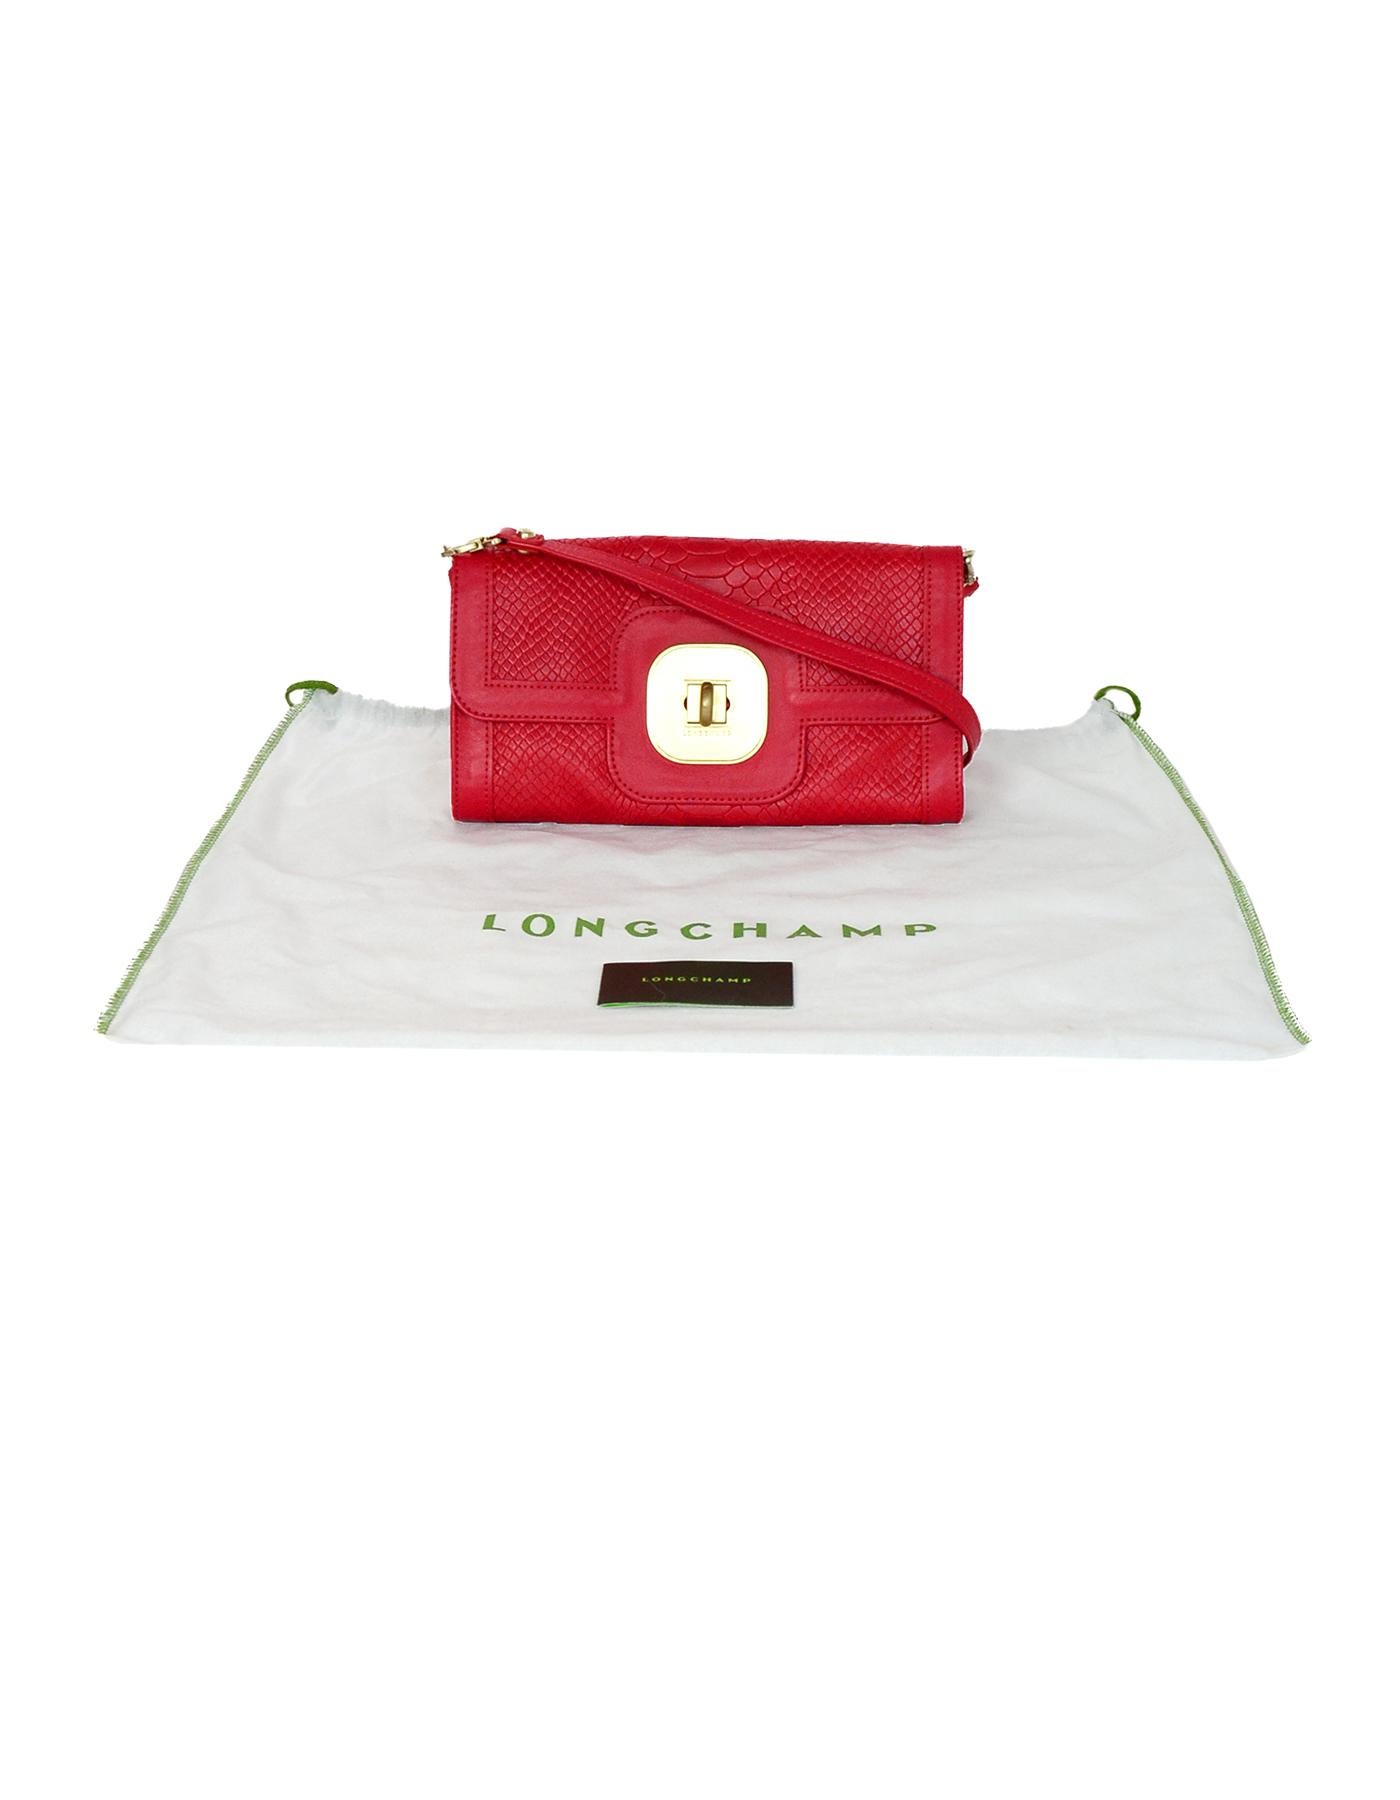 Longchamp Red Leather Embossed Snake Gatsby Flap Clutch/Shoulder Bag 2